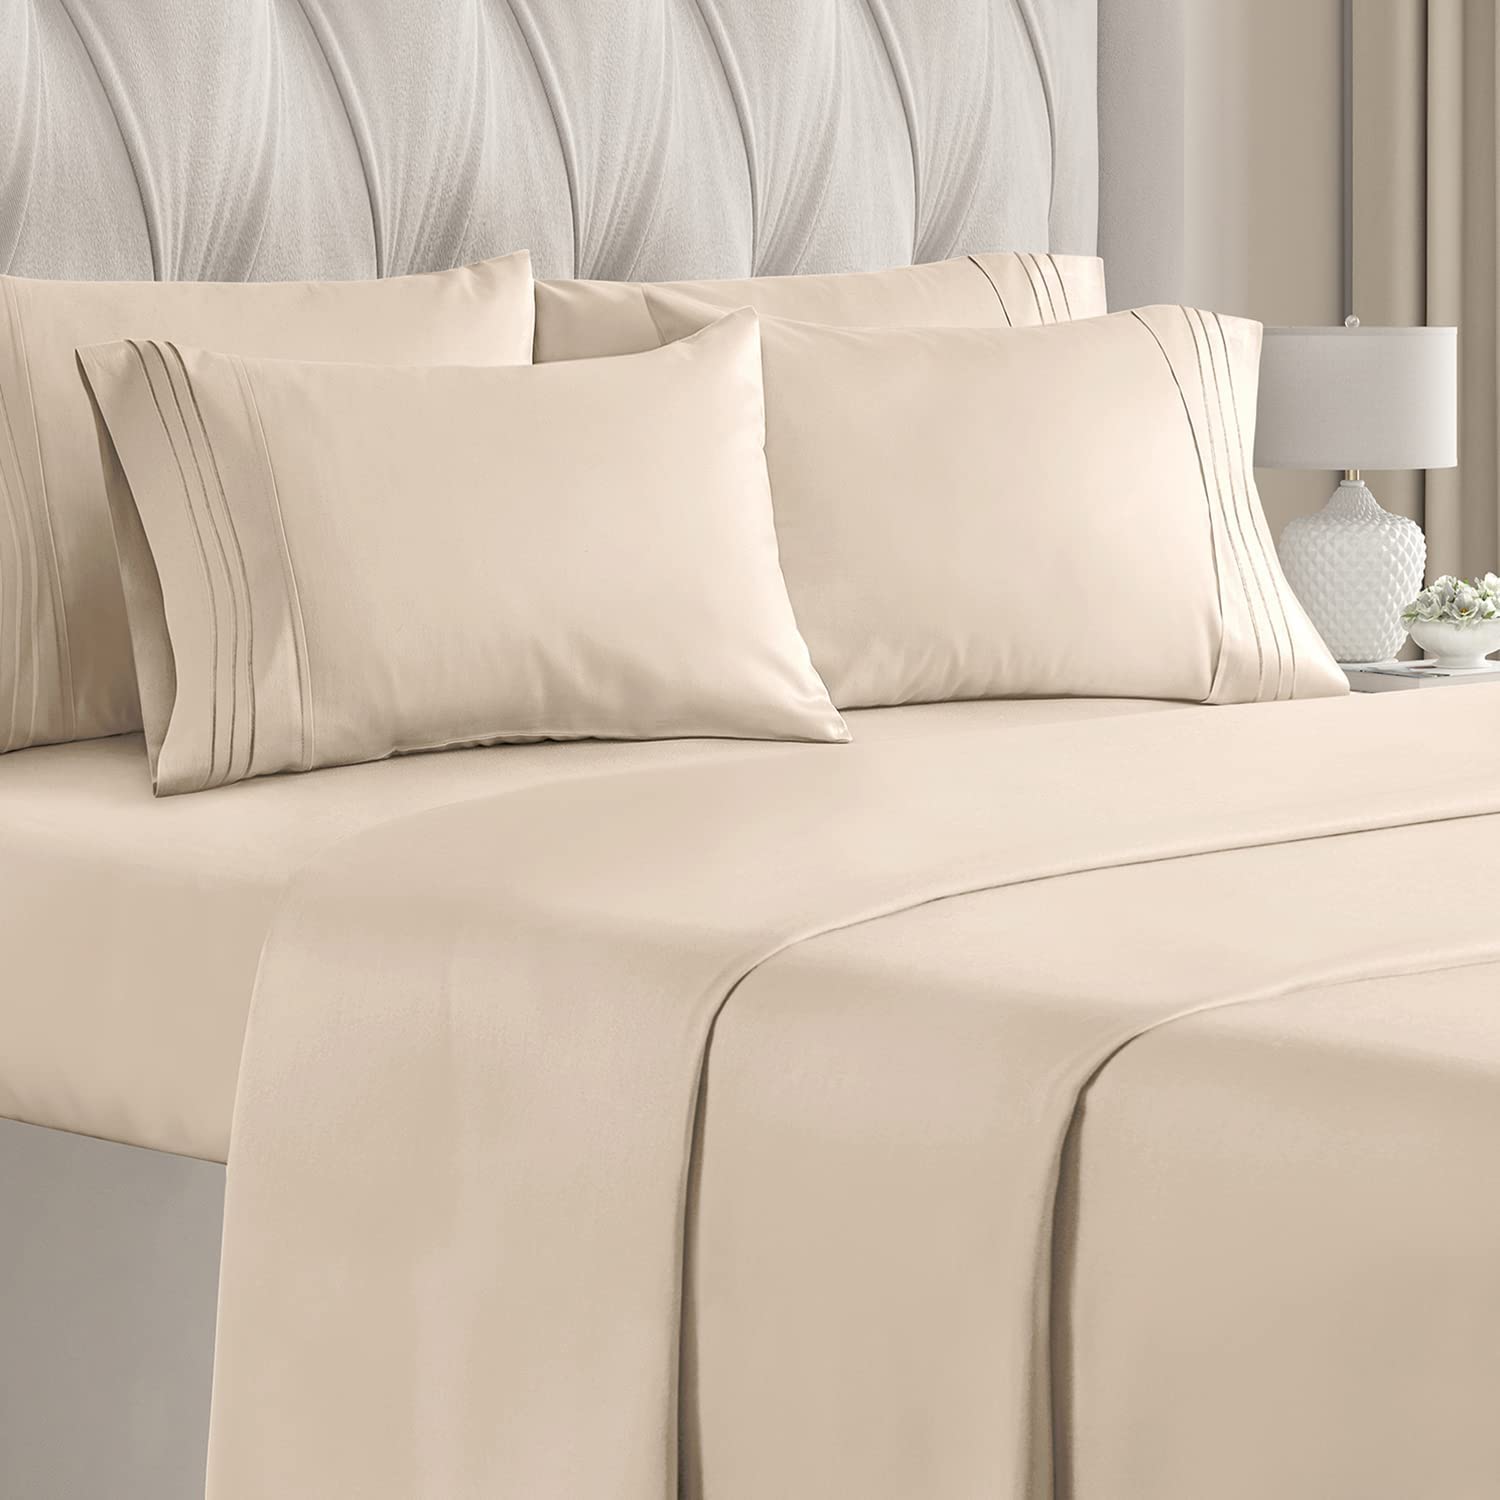 King Size Sheet Set - 6 Piece Set - Hotel Luxury Bed Sheets